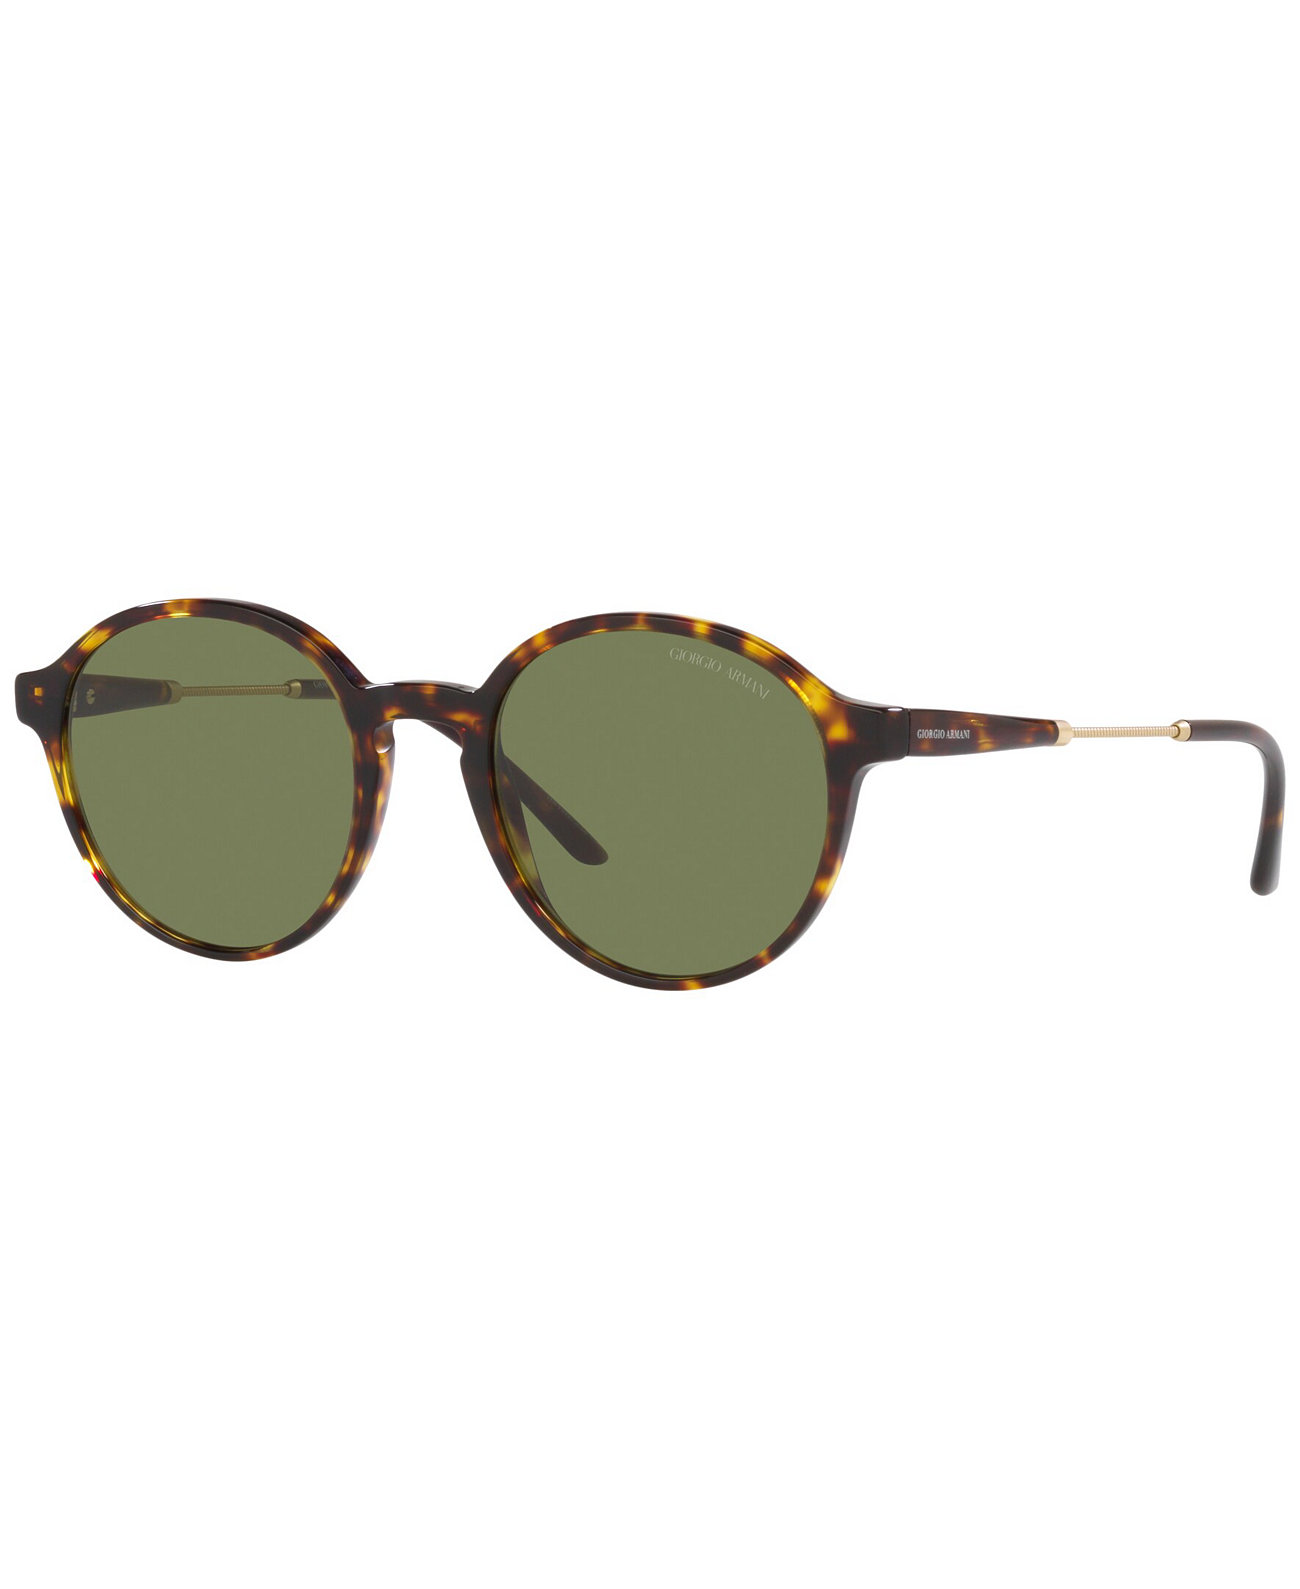 Мужские солнцезащитные очки, 51 Giorgio Armani